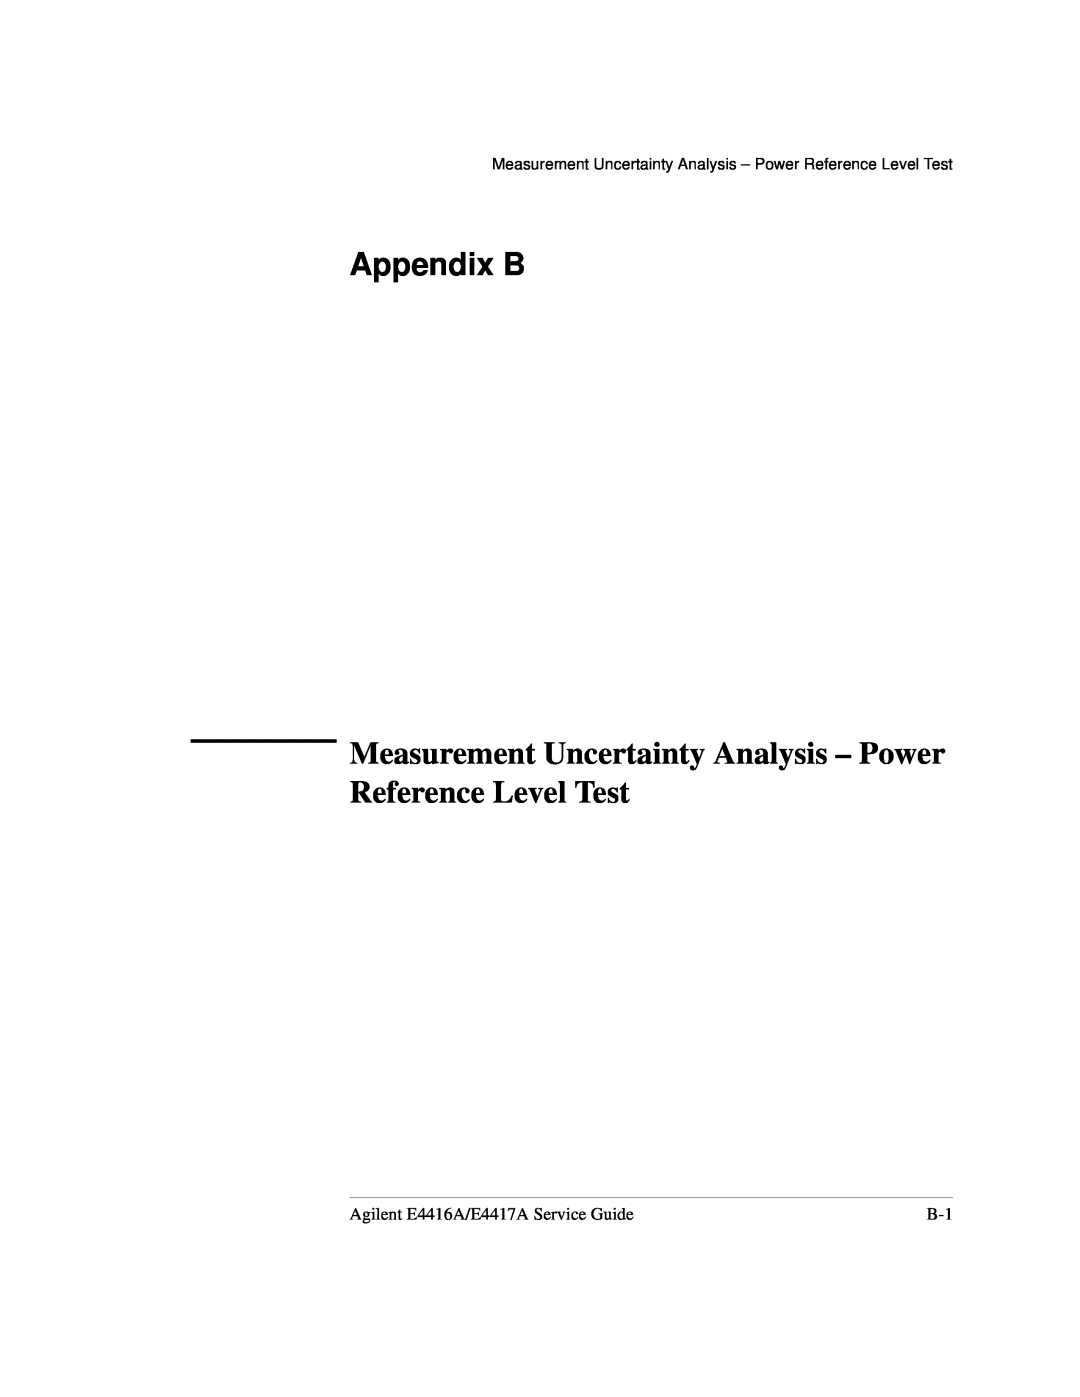 Agilent Technologies e4419b, e4418b manual Appendix B, Measurement Uncertainty Analysis - Power Reference Level Test 